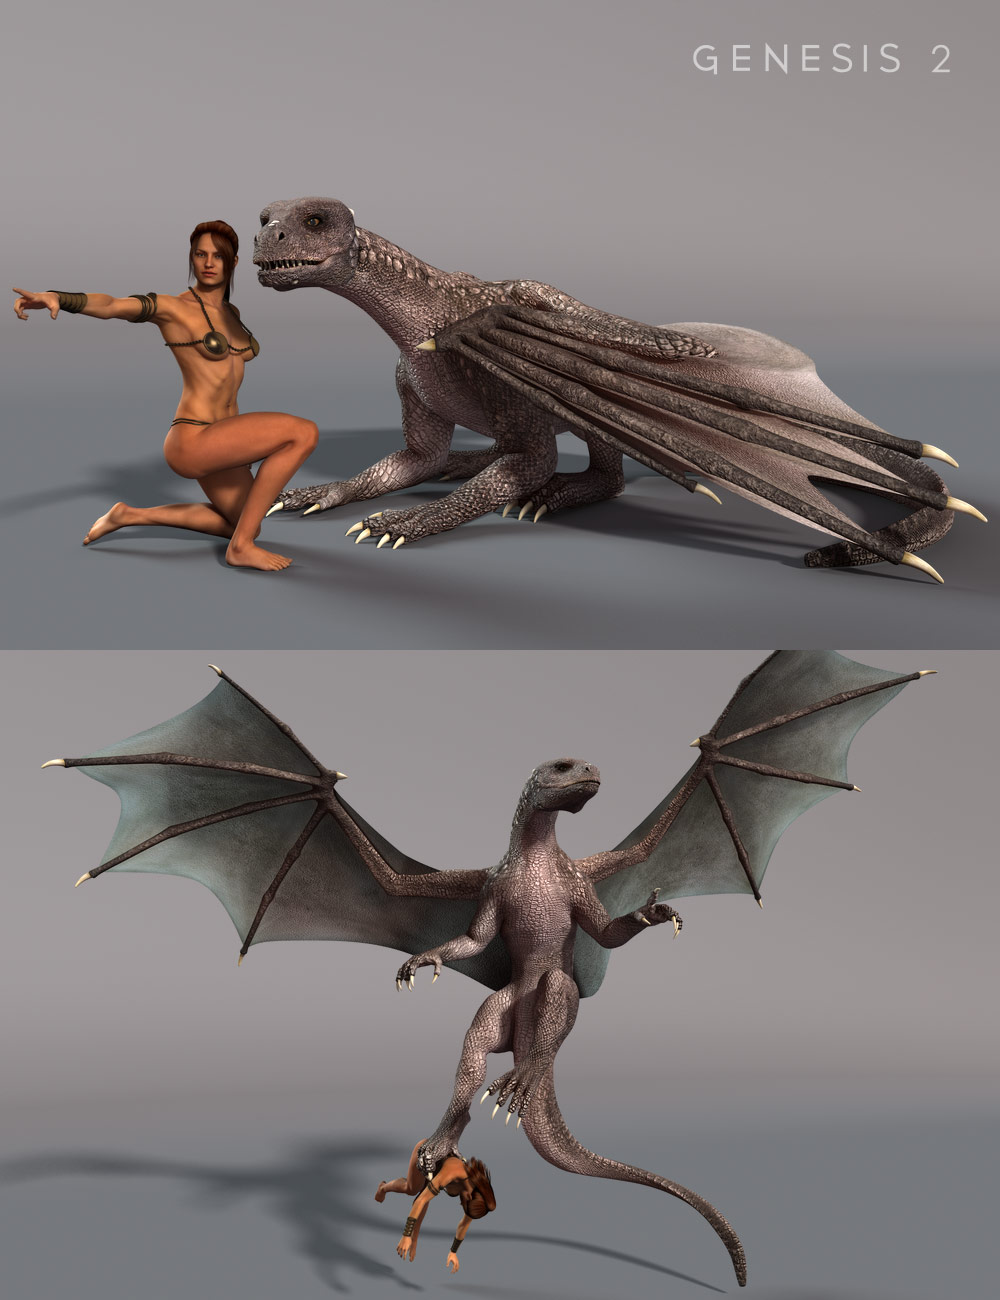 DAZ Dragon 3 Fantasy Poses by: Muscleman, 3D Models by Daz 3D